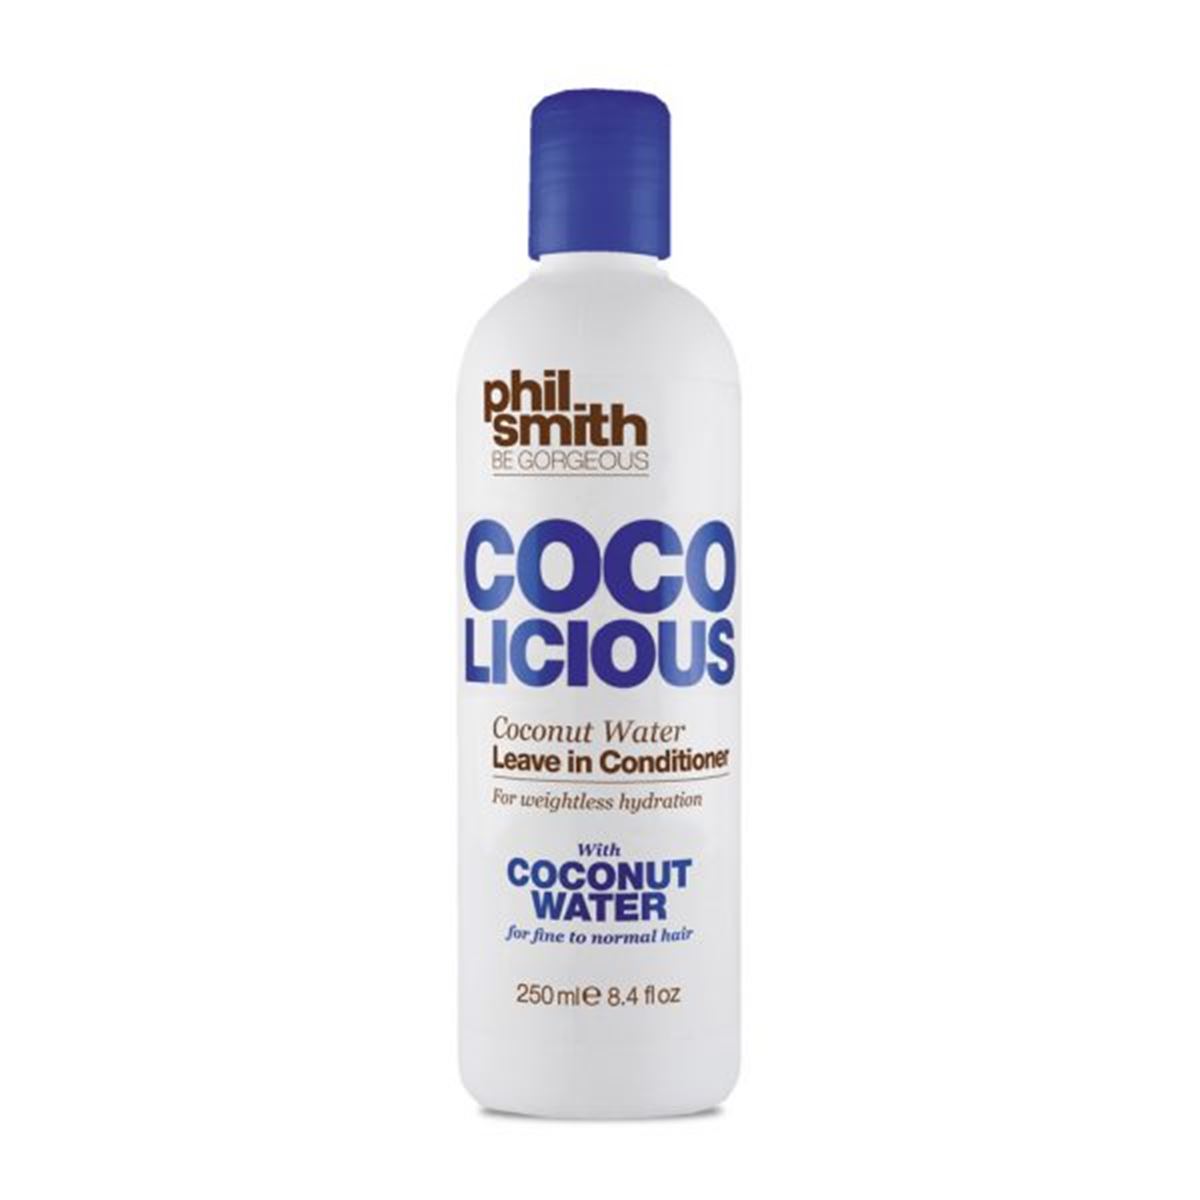 Phil Smith Coco Licious Coconut Water Durulanmayan Saç Kremi 250 ml